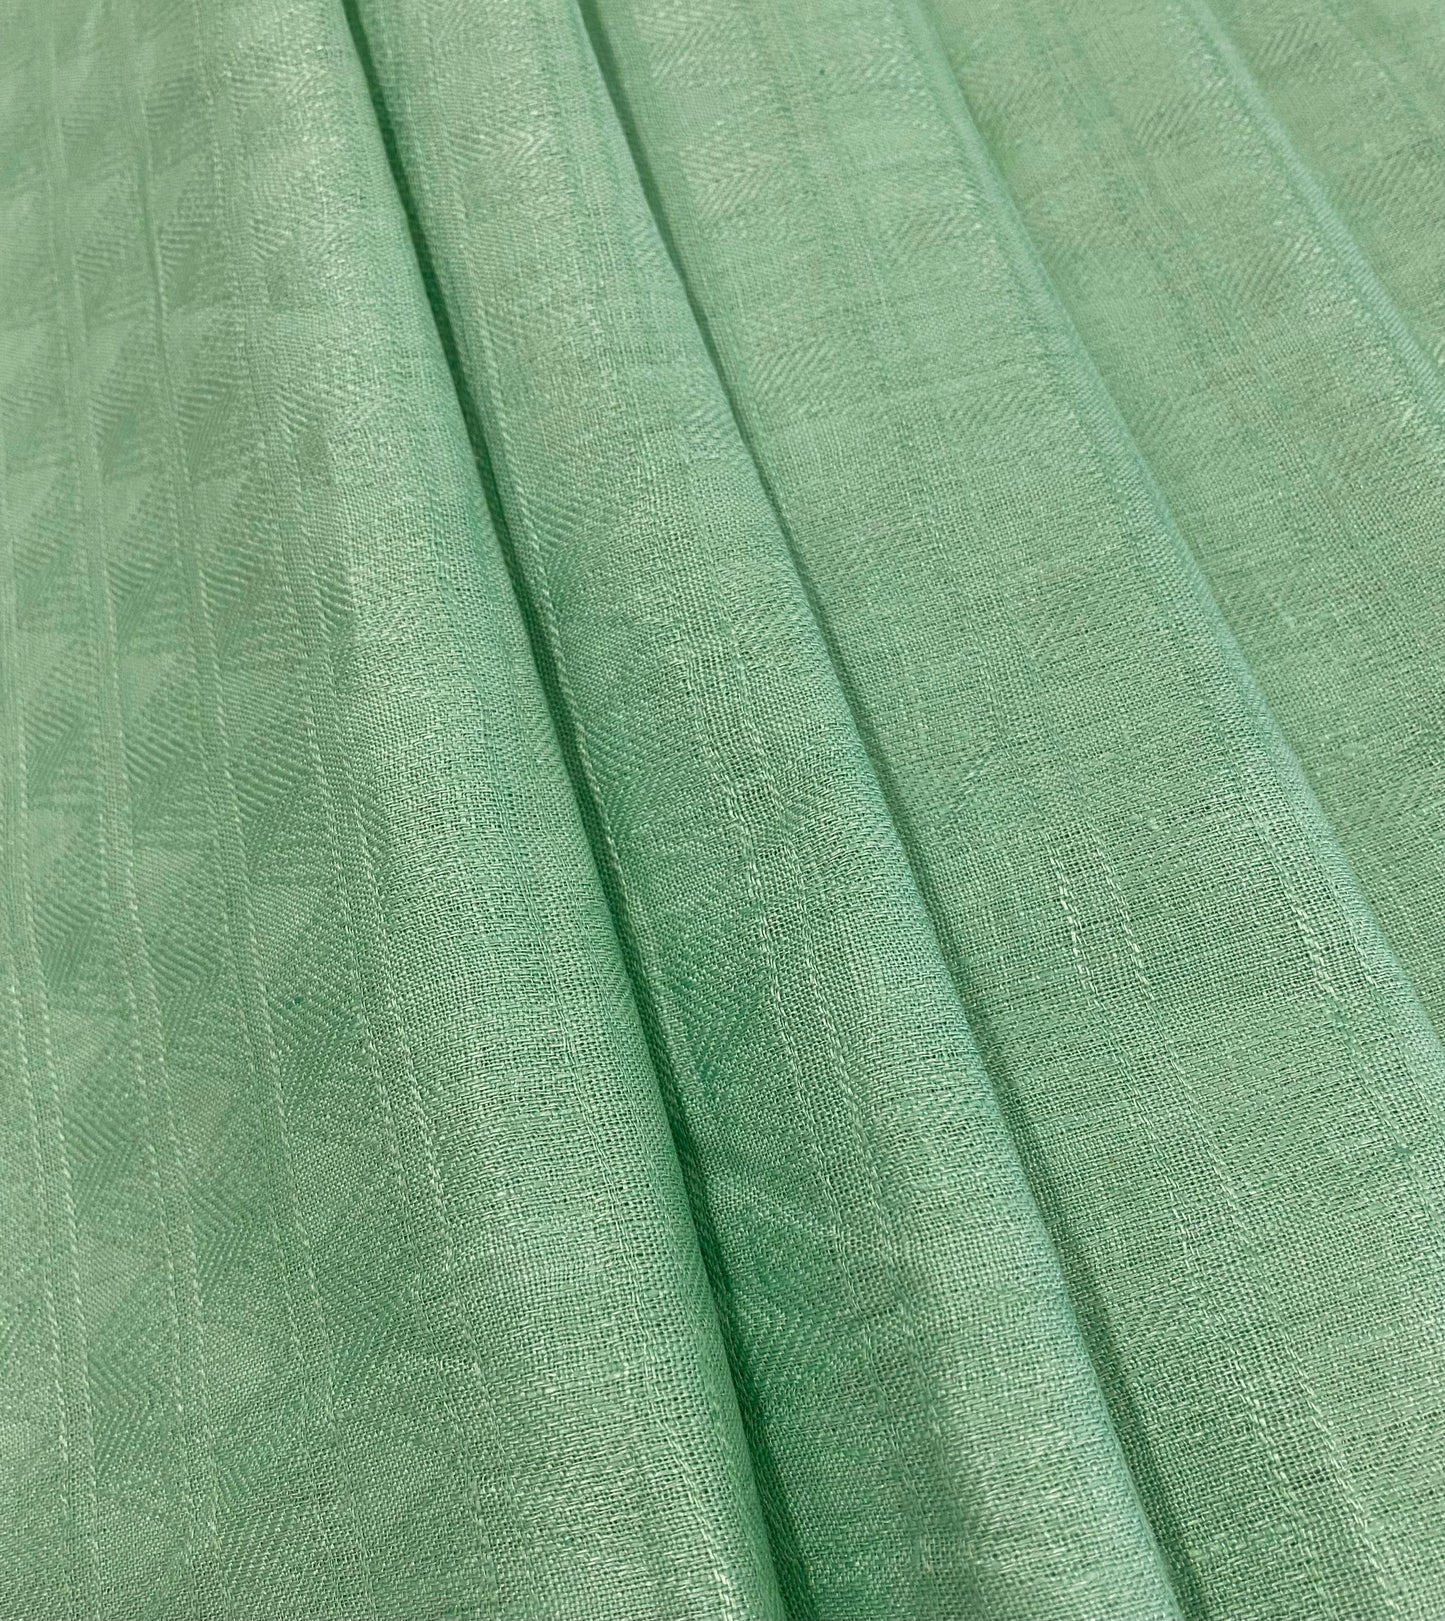 Persian Green Self Design - Premium Dyed Linen Fabric LG-216